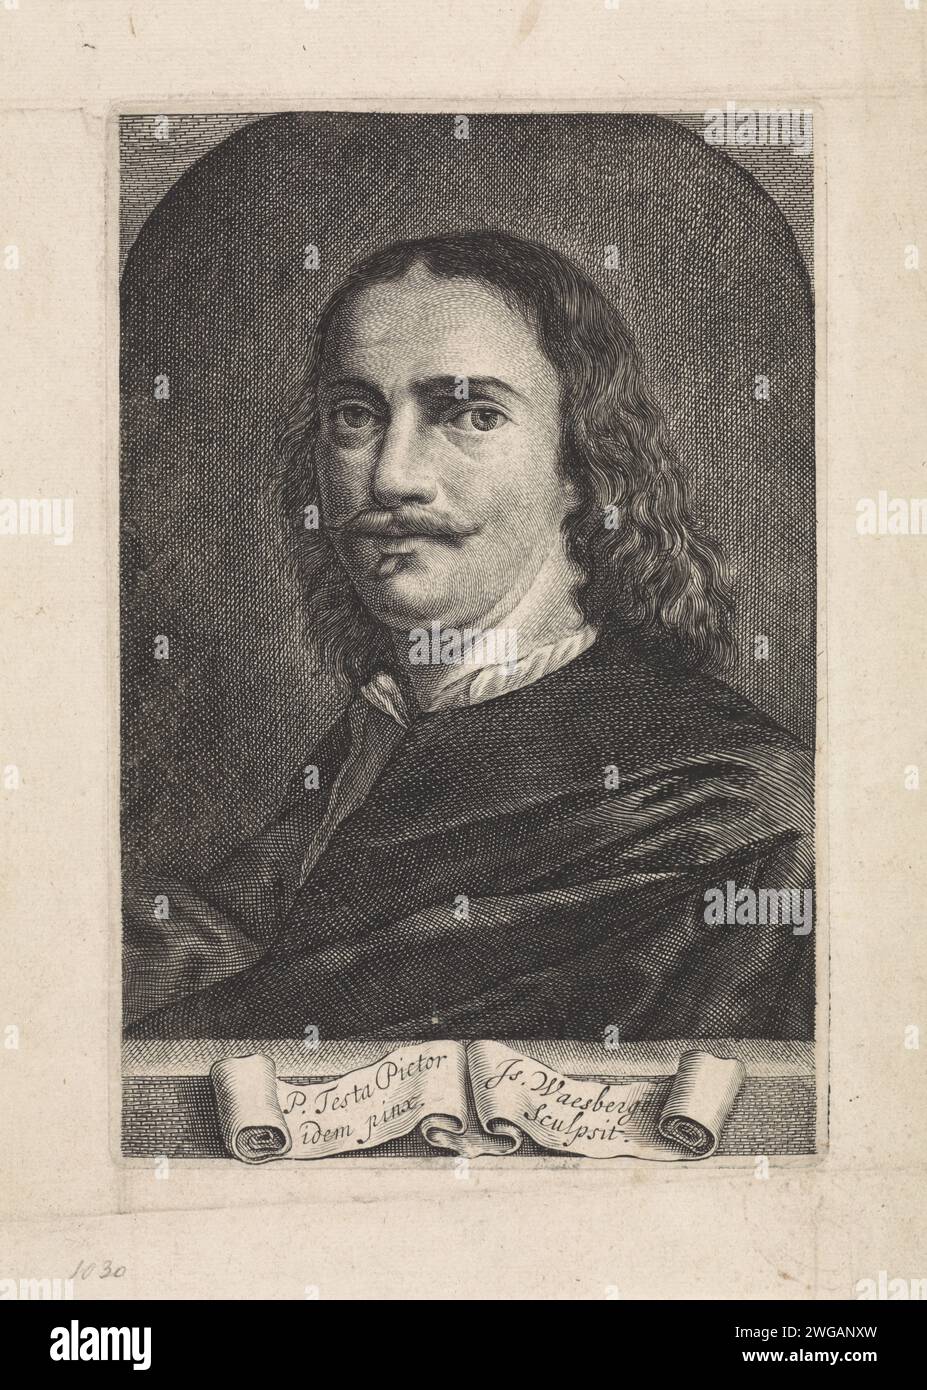 Portrait of the artist Pietro Testa, Isaac van Waesberge, After Pietro Testa, 1643 - 1657 print  The Hague paper engraving Stock Photo